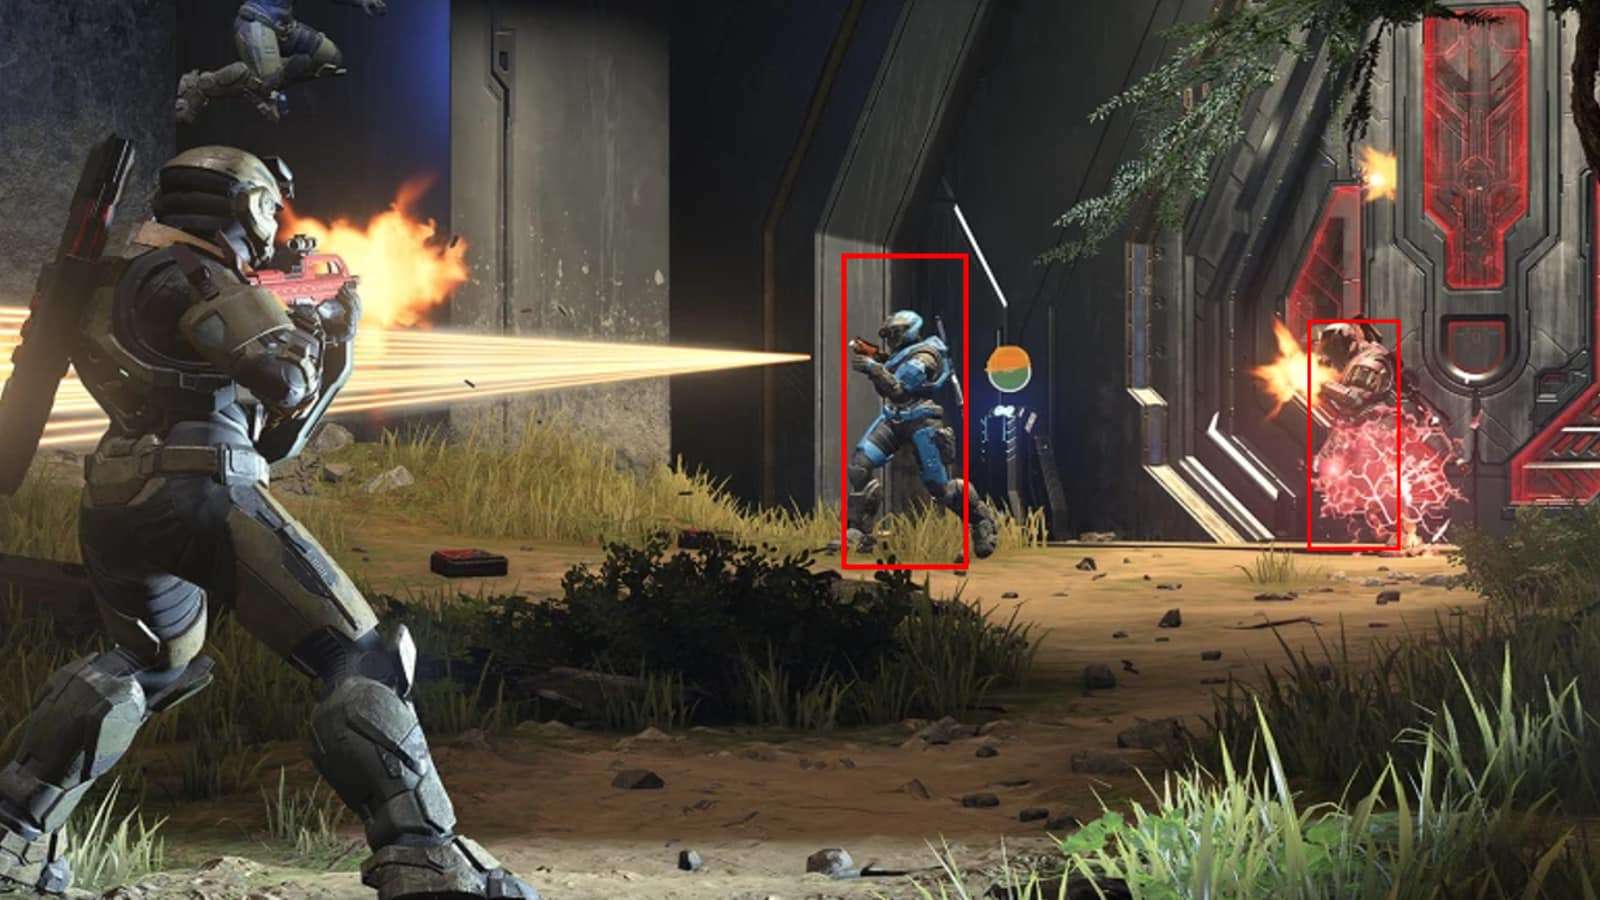 Fake wallhacks in Halo Infinite